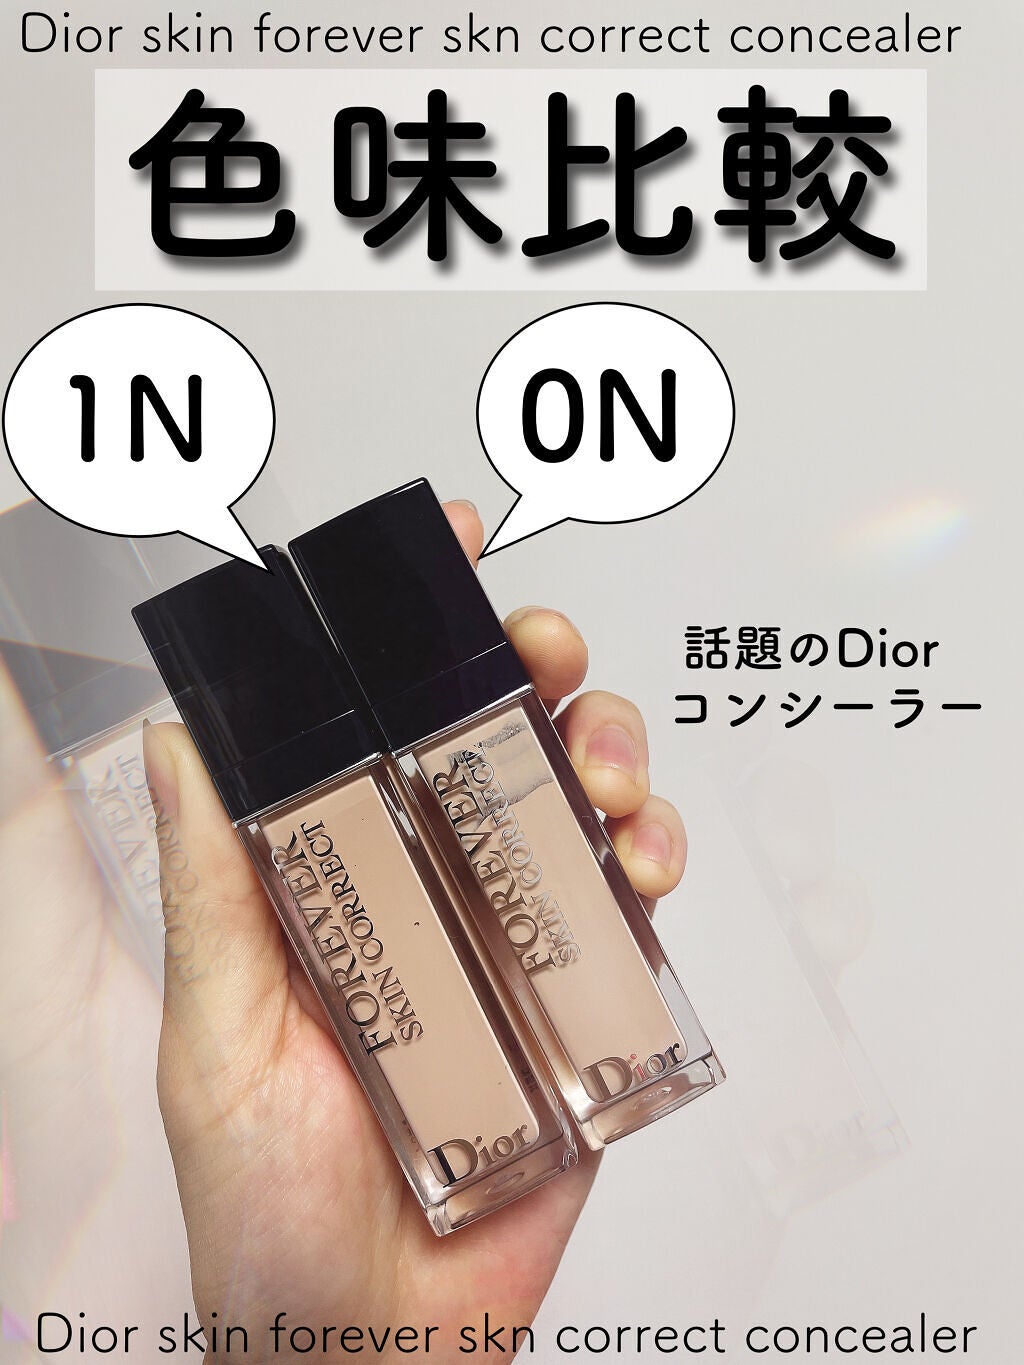 Diorコンシーラー1N - コンシーラー